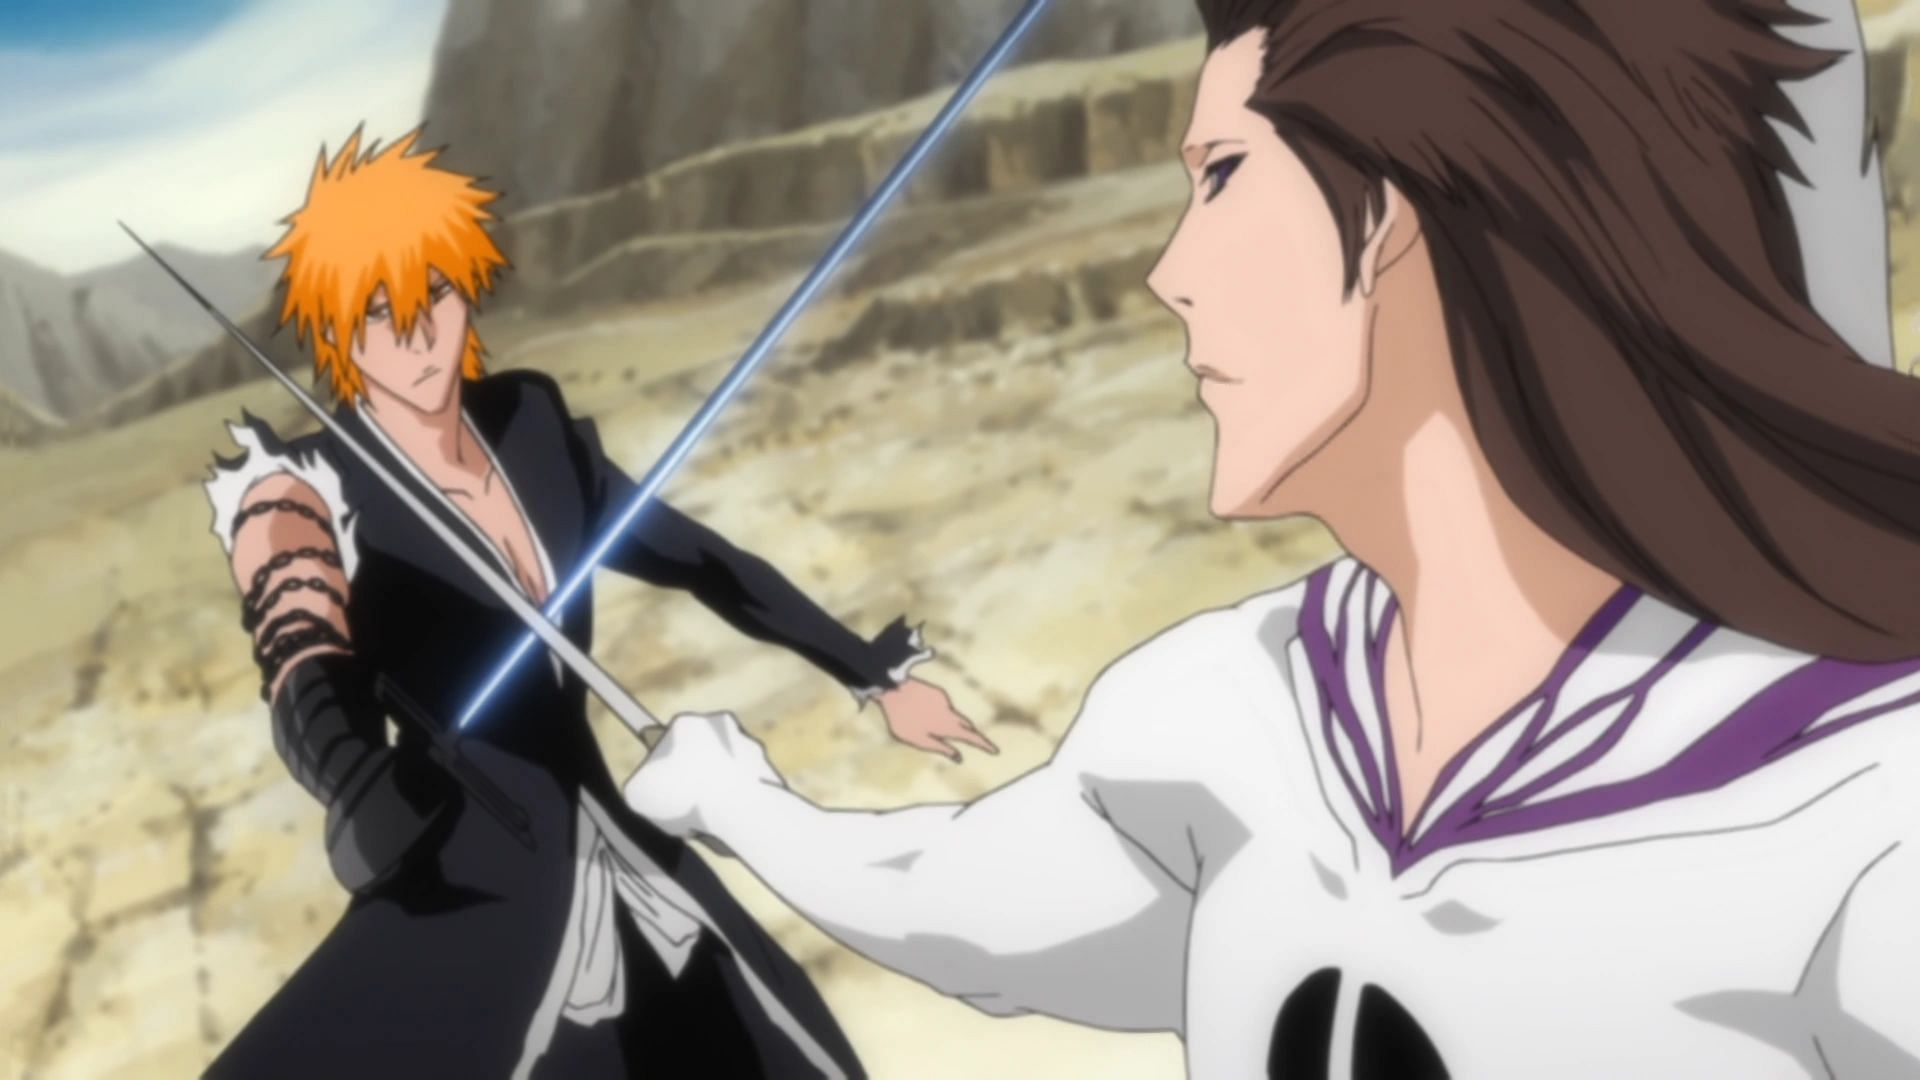 Ichigo vs Aizen in Bleach (Image via Studio Pierrot)